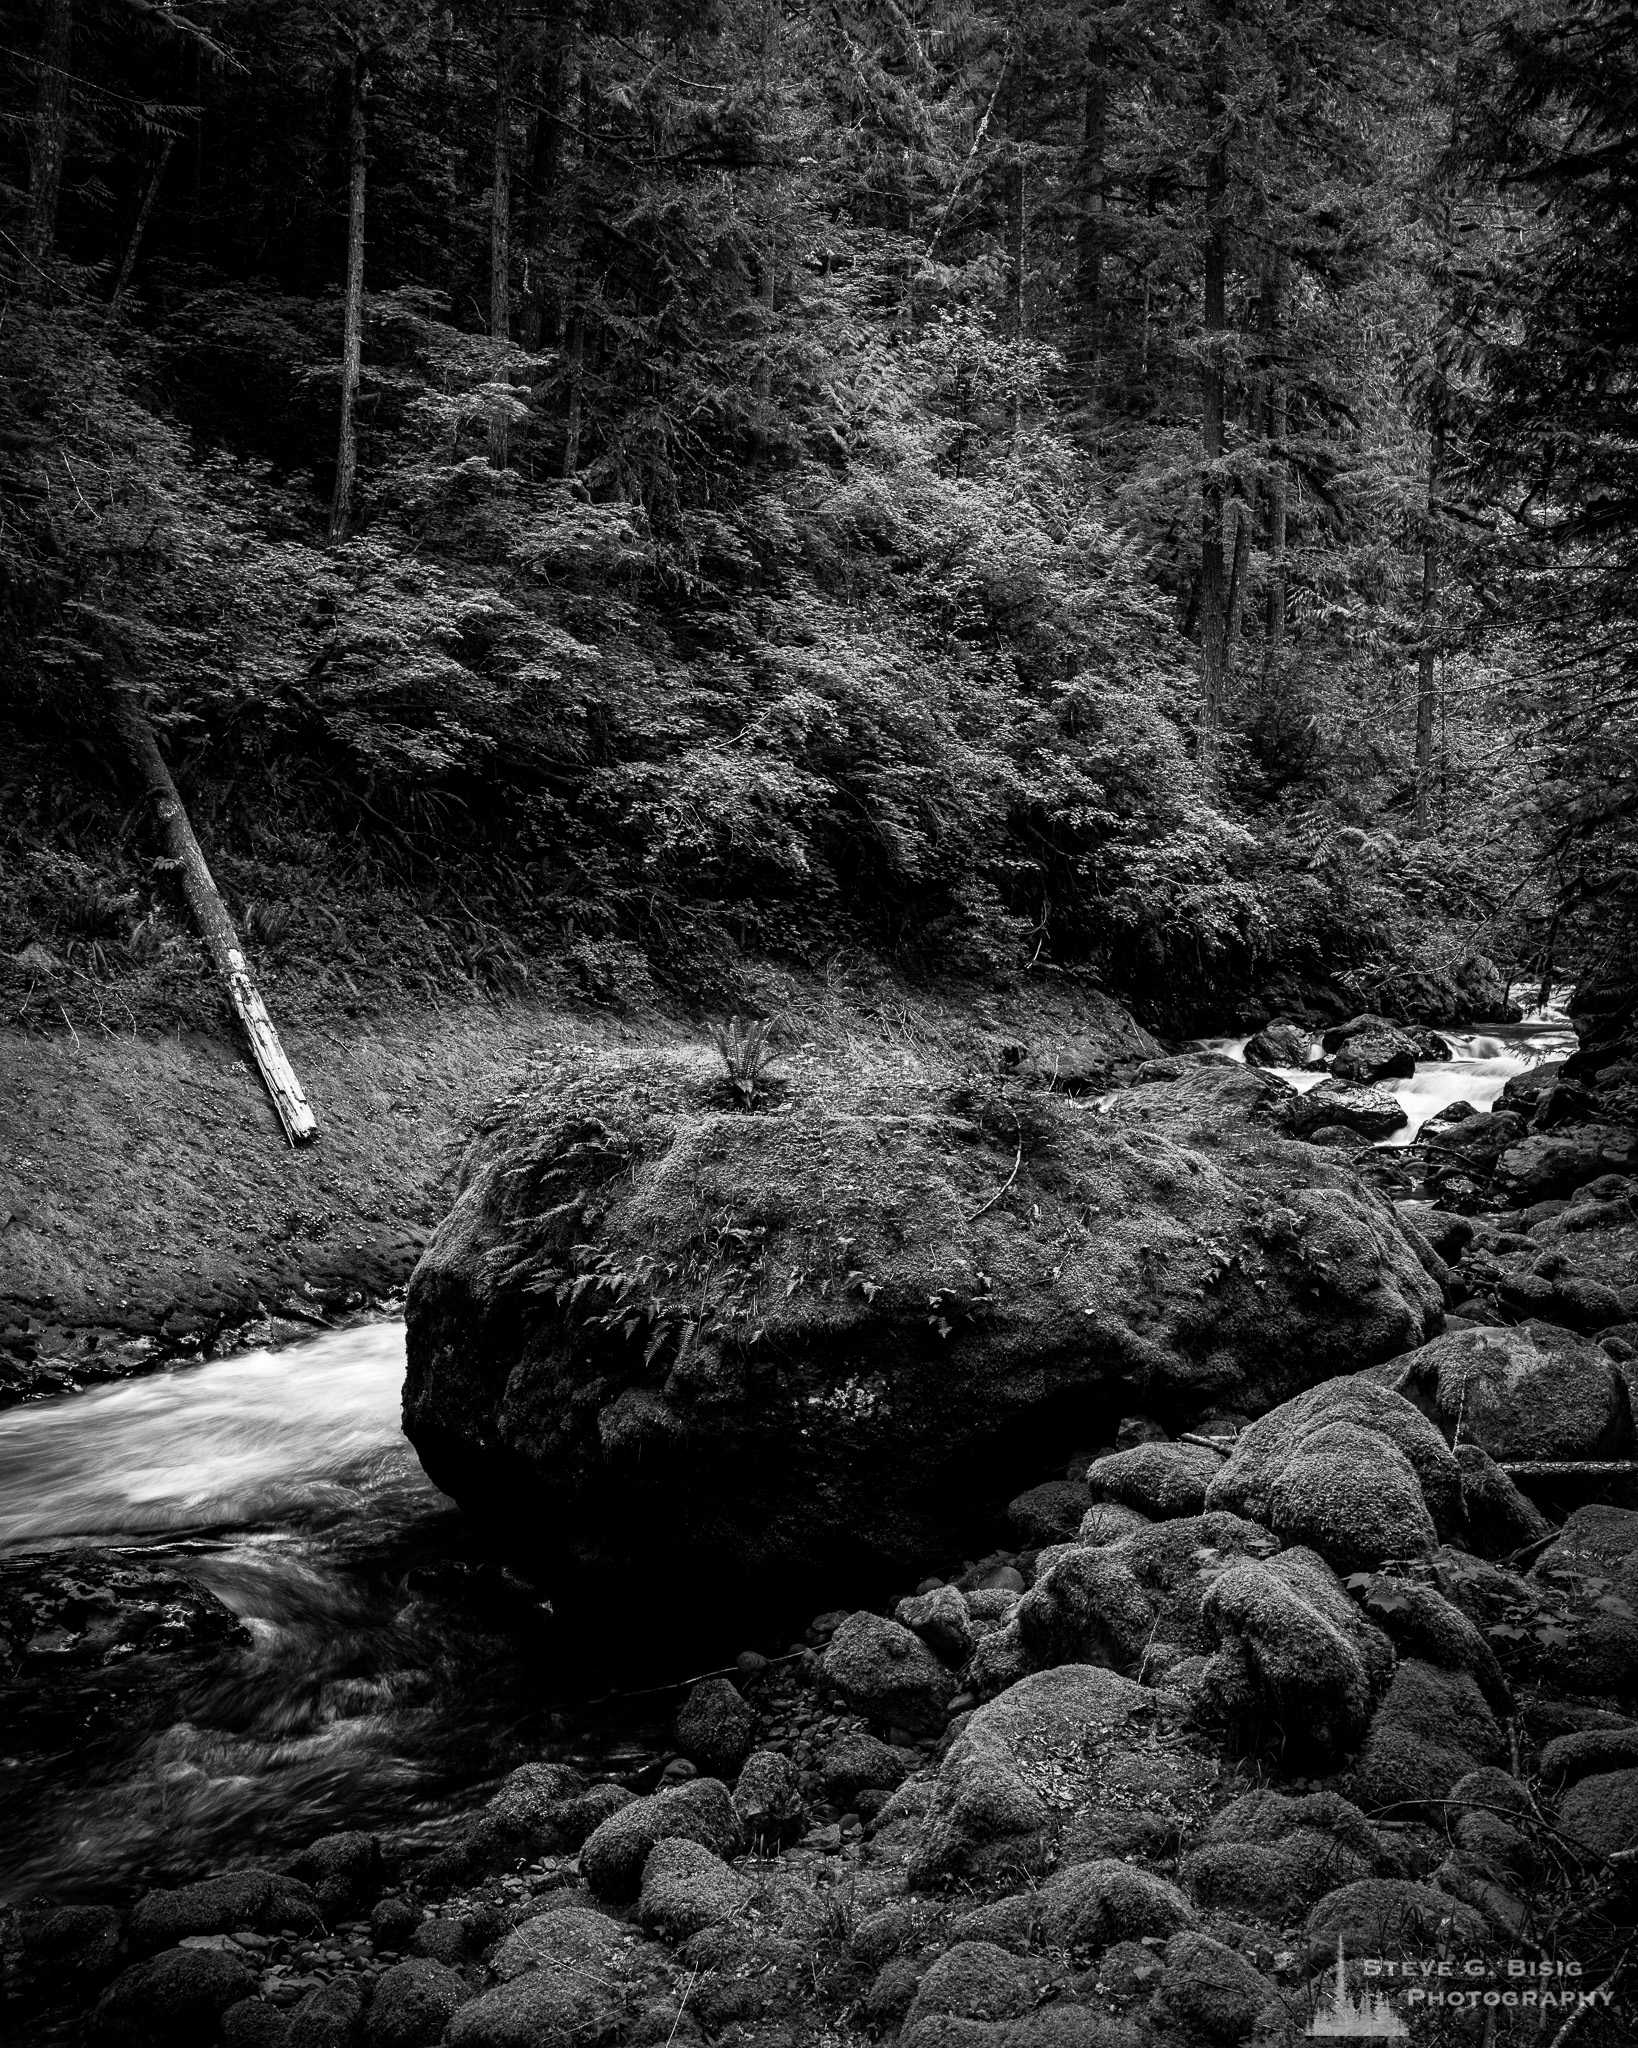 Moss Covered Rocks, Gifford Pinchot National Forest, Washington, 2019